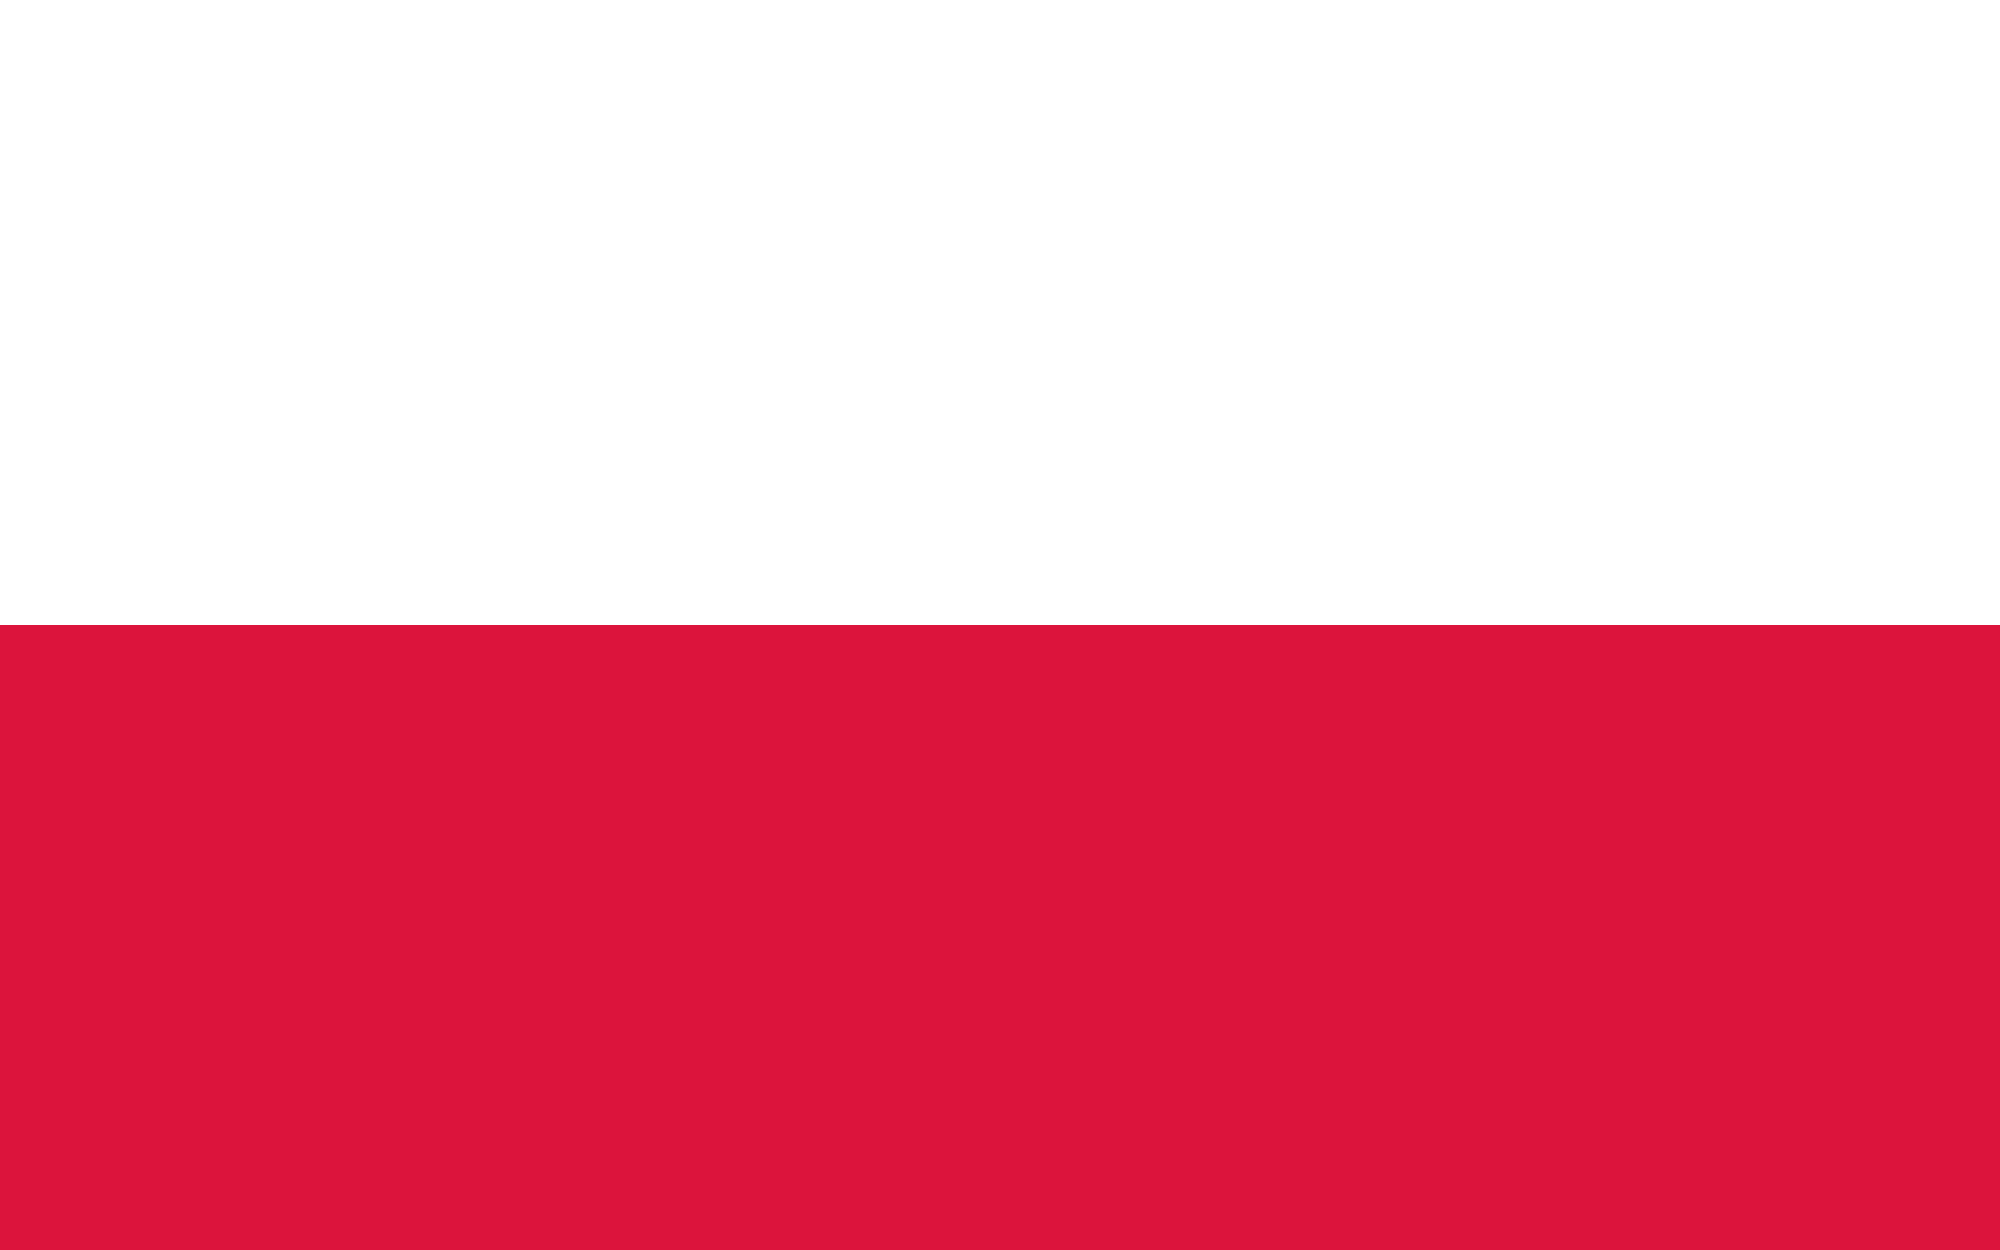 Flag of Kashubia - Wikipedia